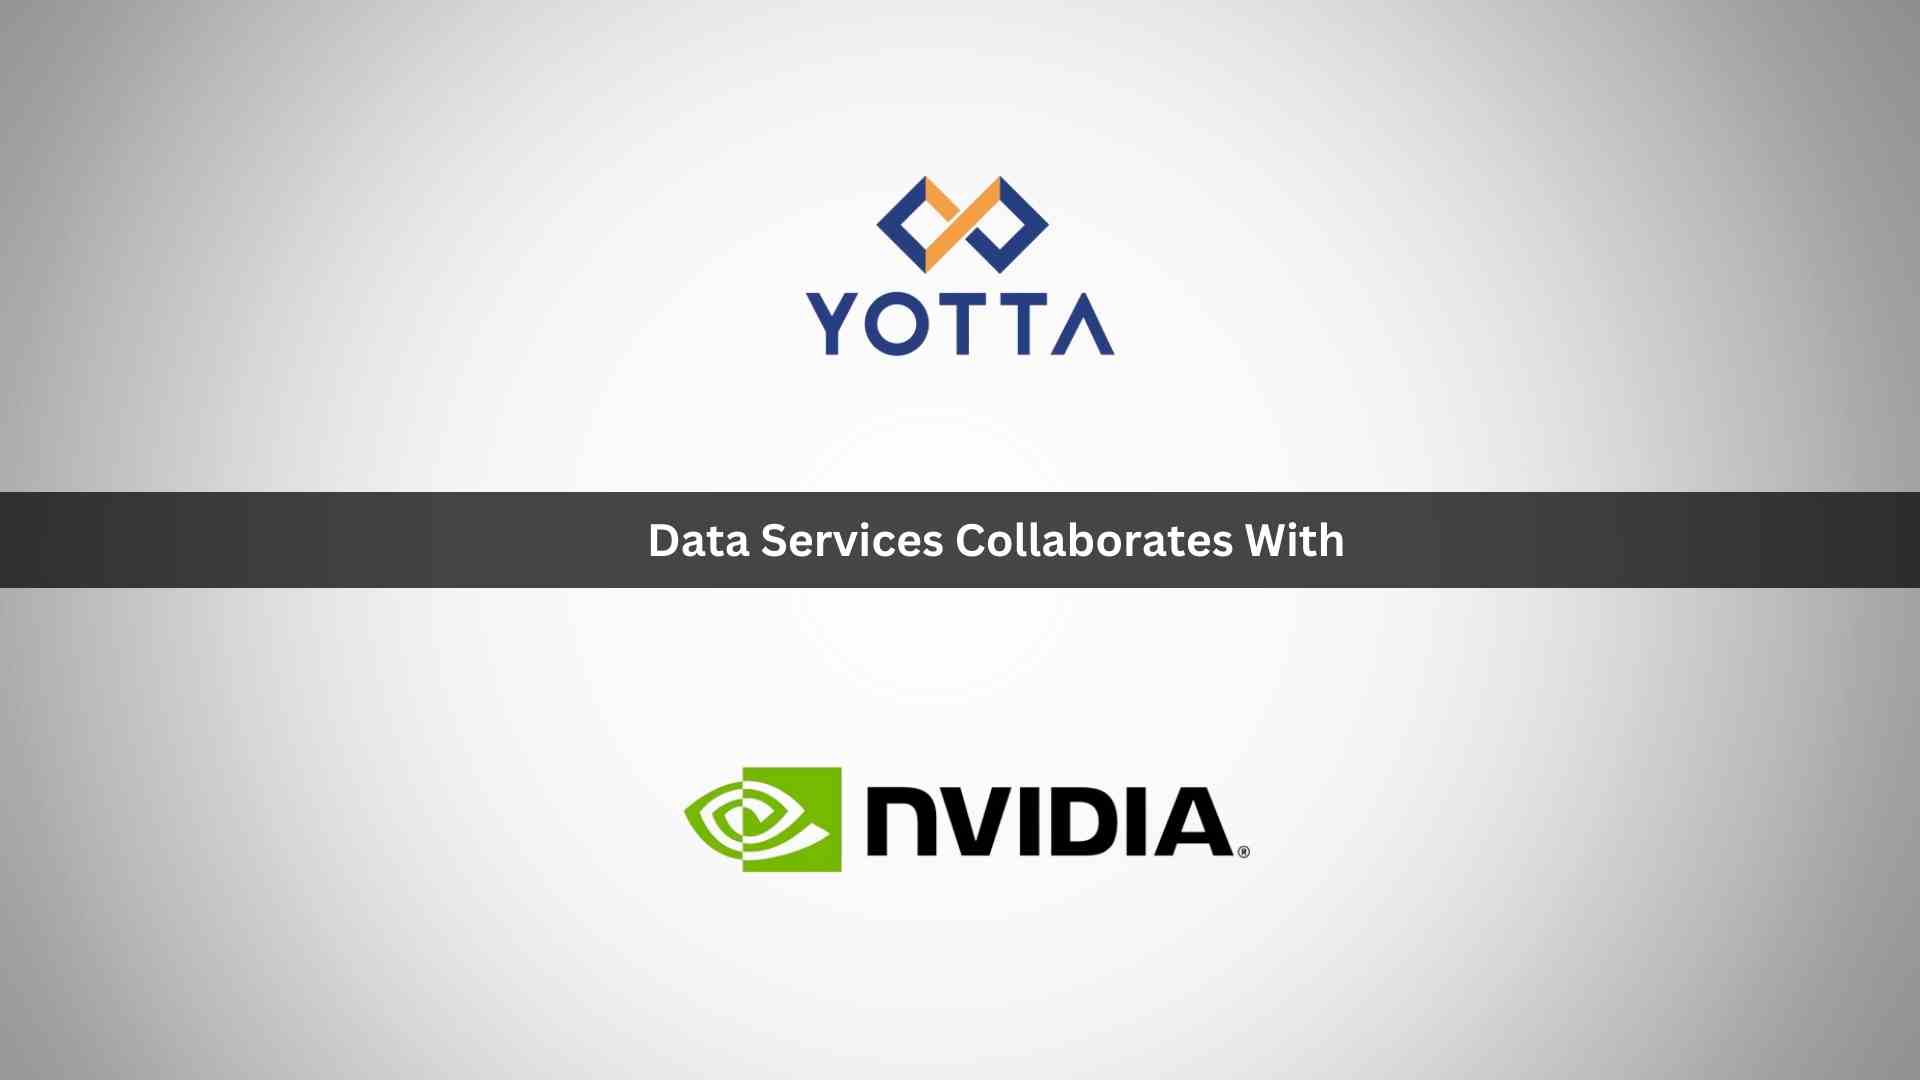 Yotta Data Services Collaborates with NVIDIA to Catalyze India's AI Transformation